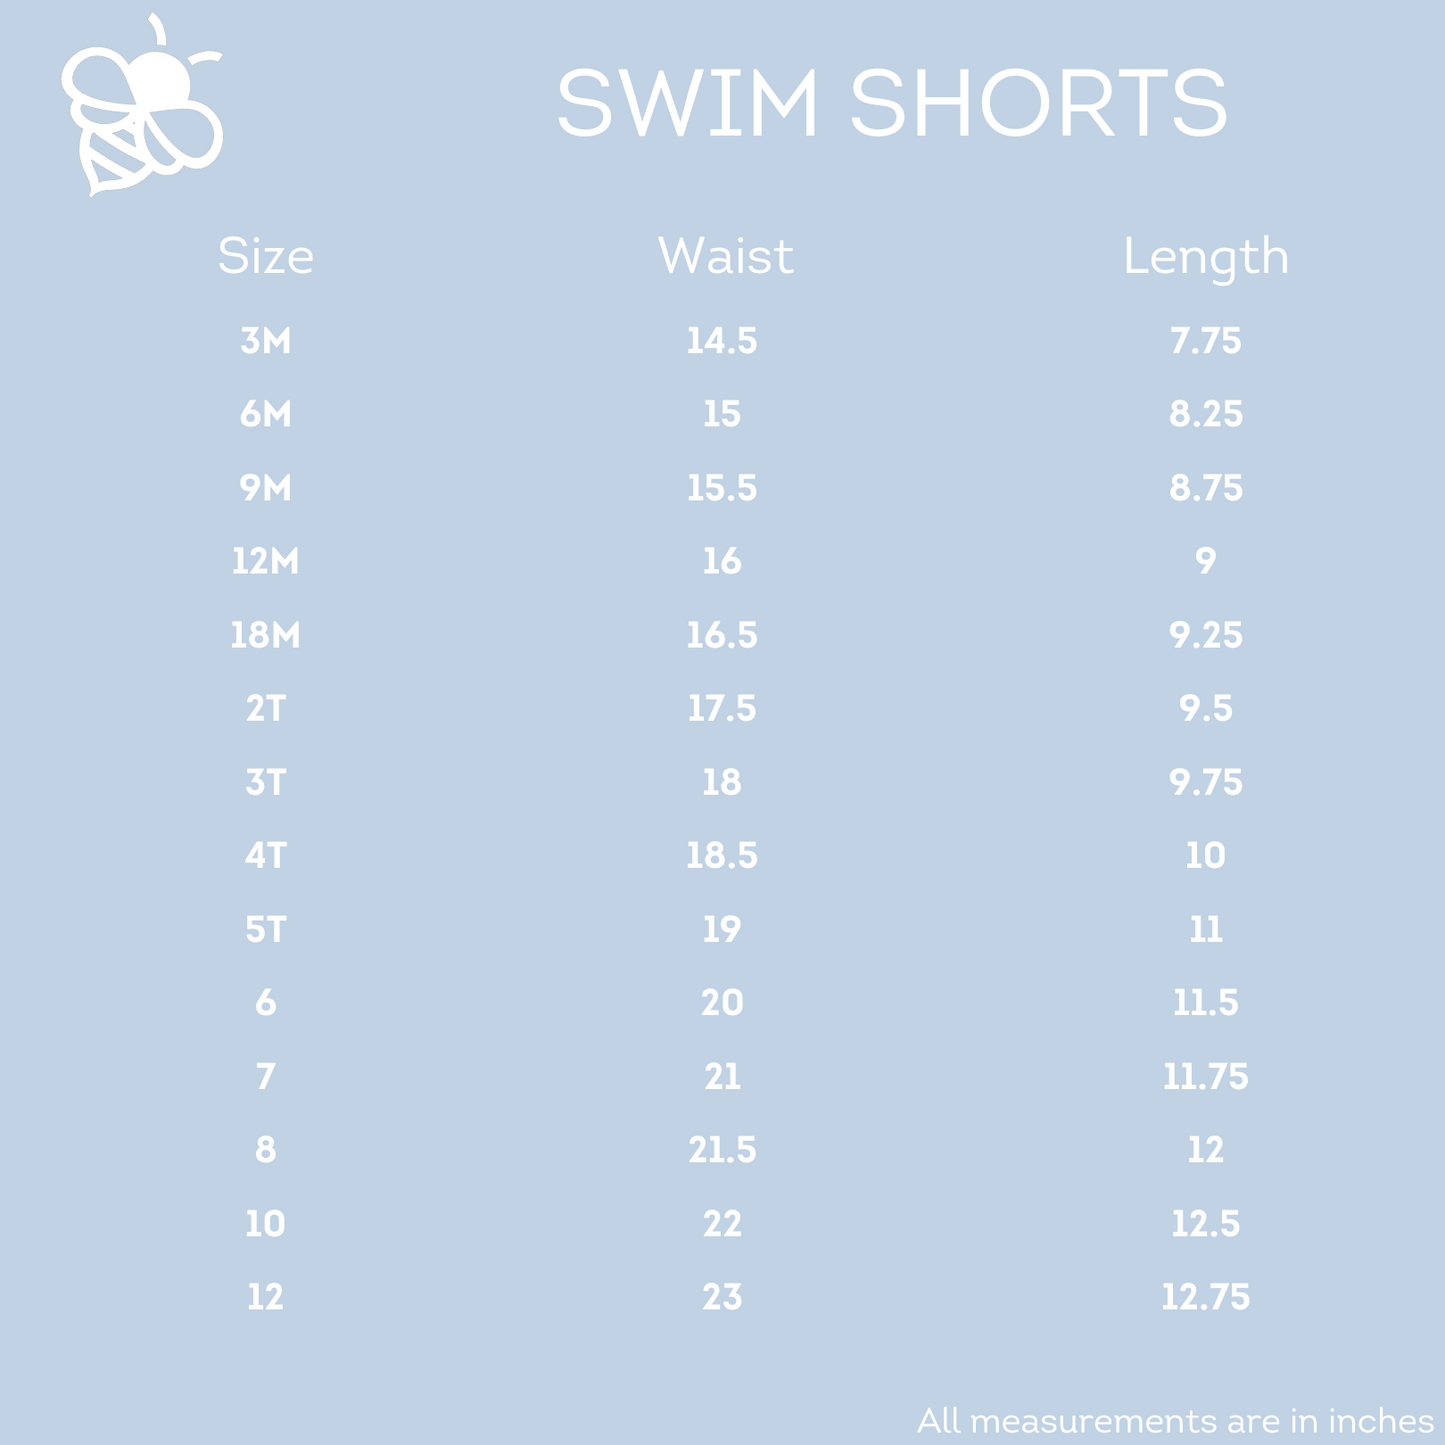 Swim Shorts - Green Gingham